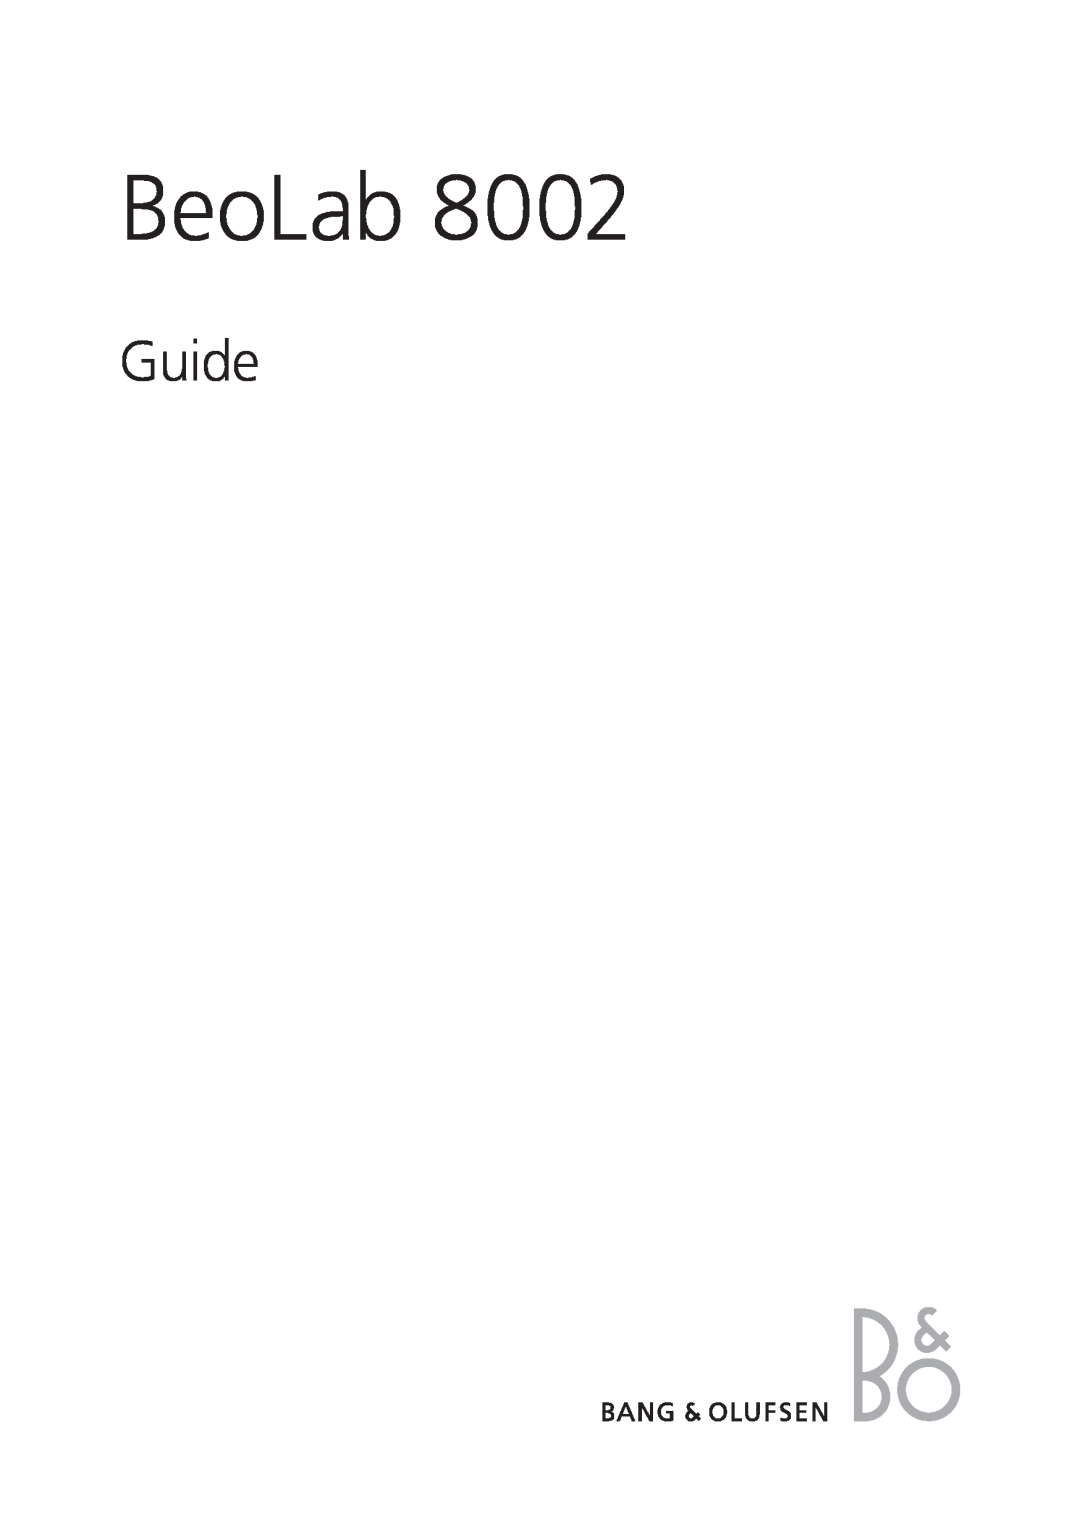 Bang & Olufsen 8002 manual BeoLab, Guide 